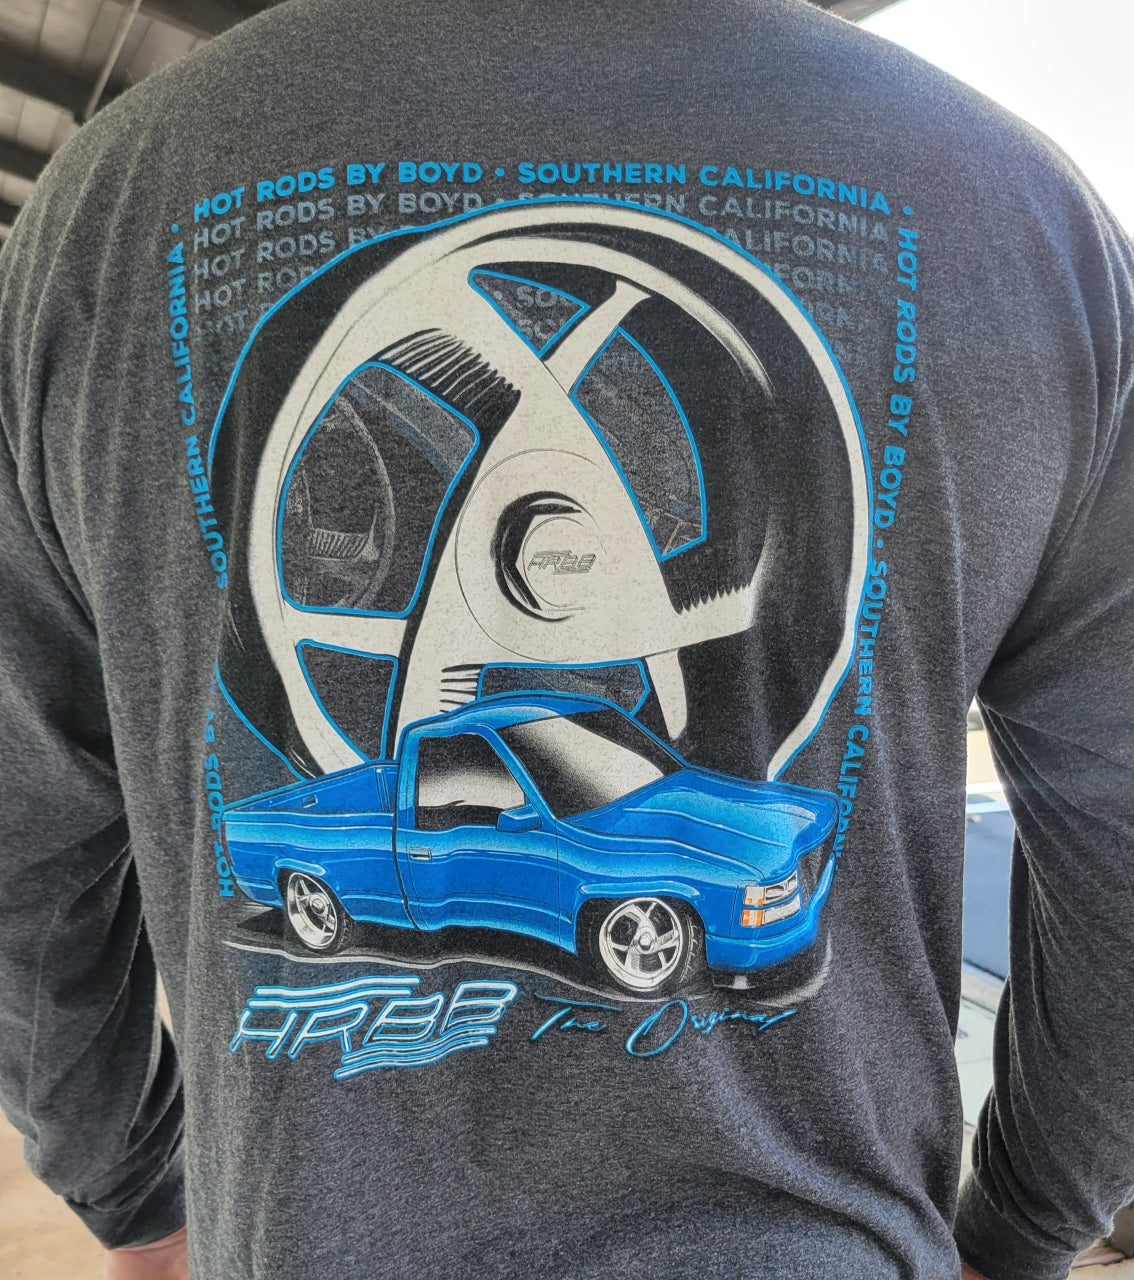 Motorsport Concepts Collab shirt